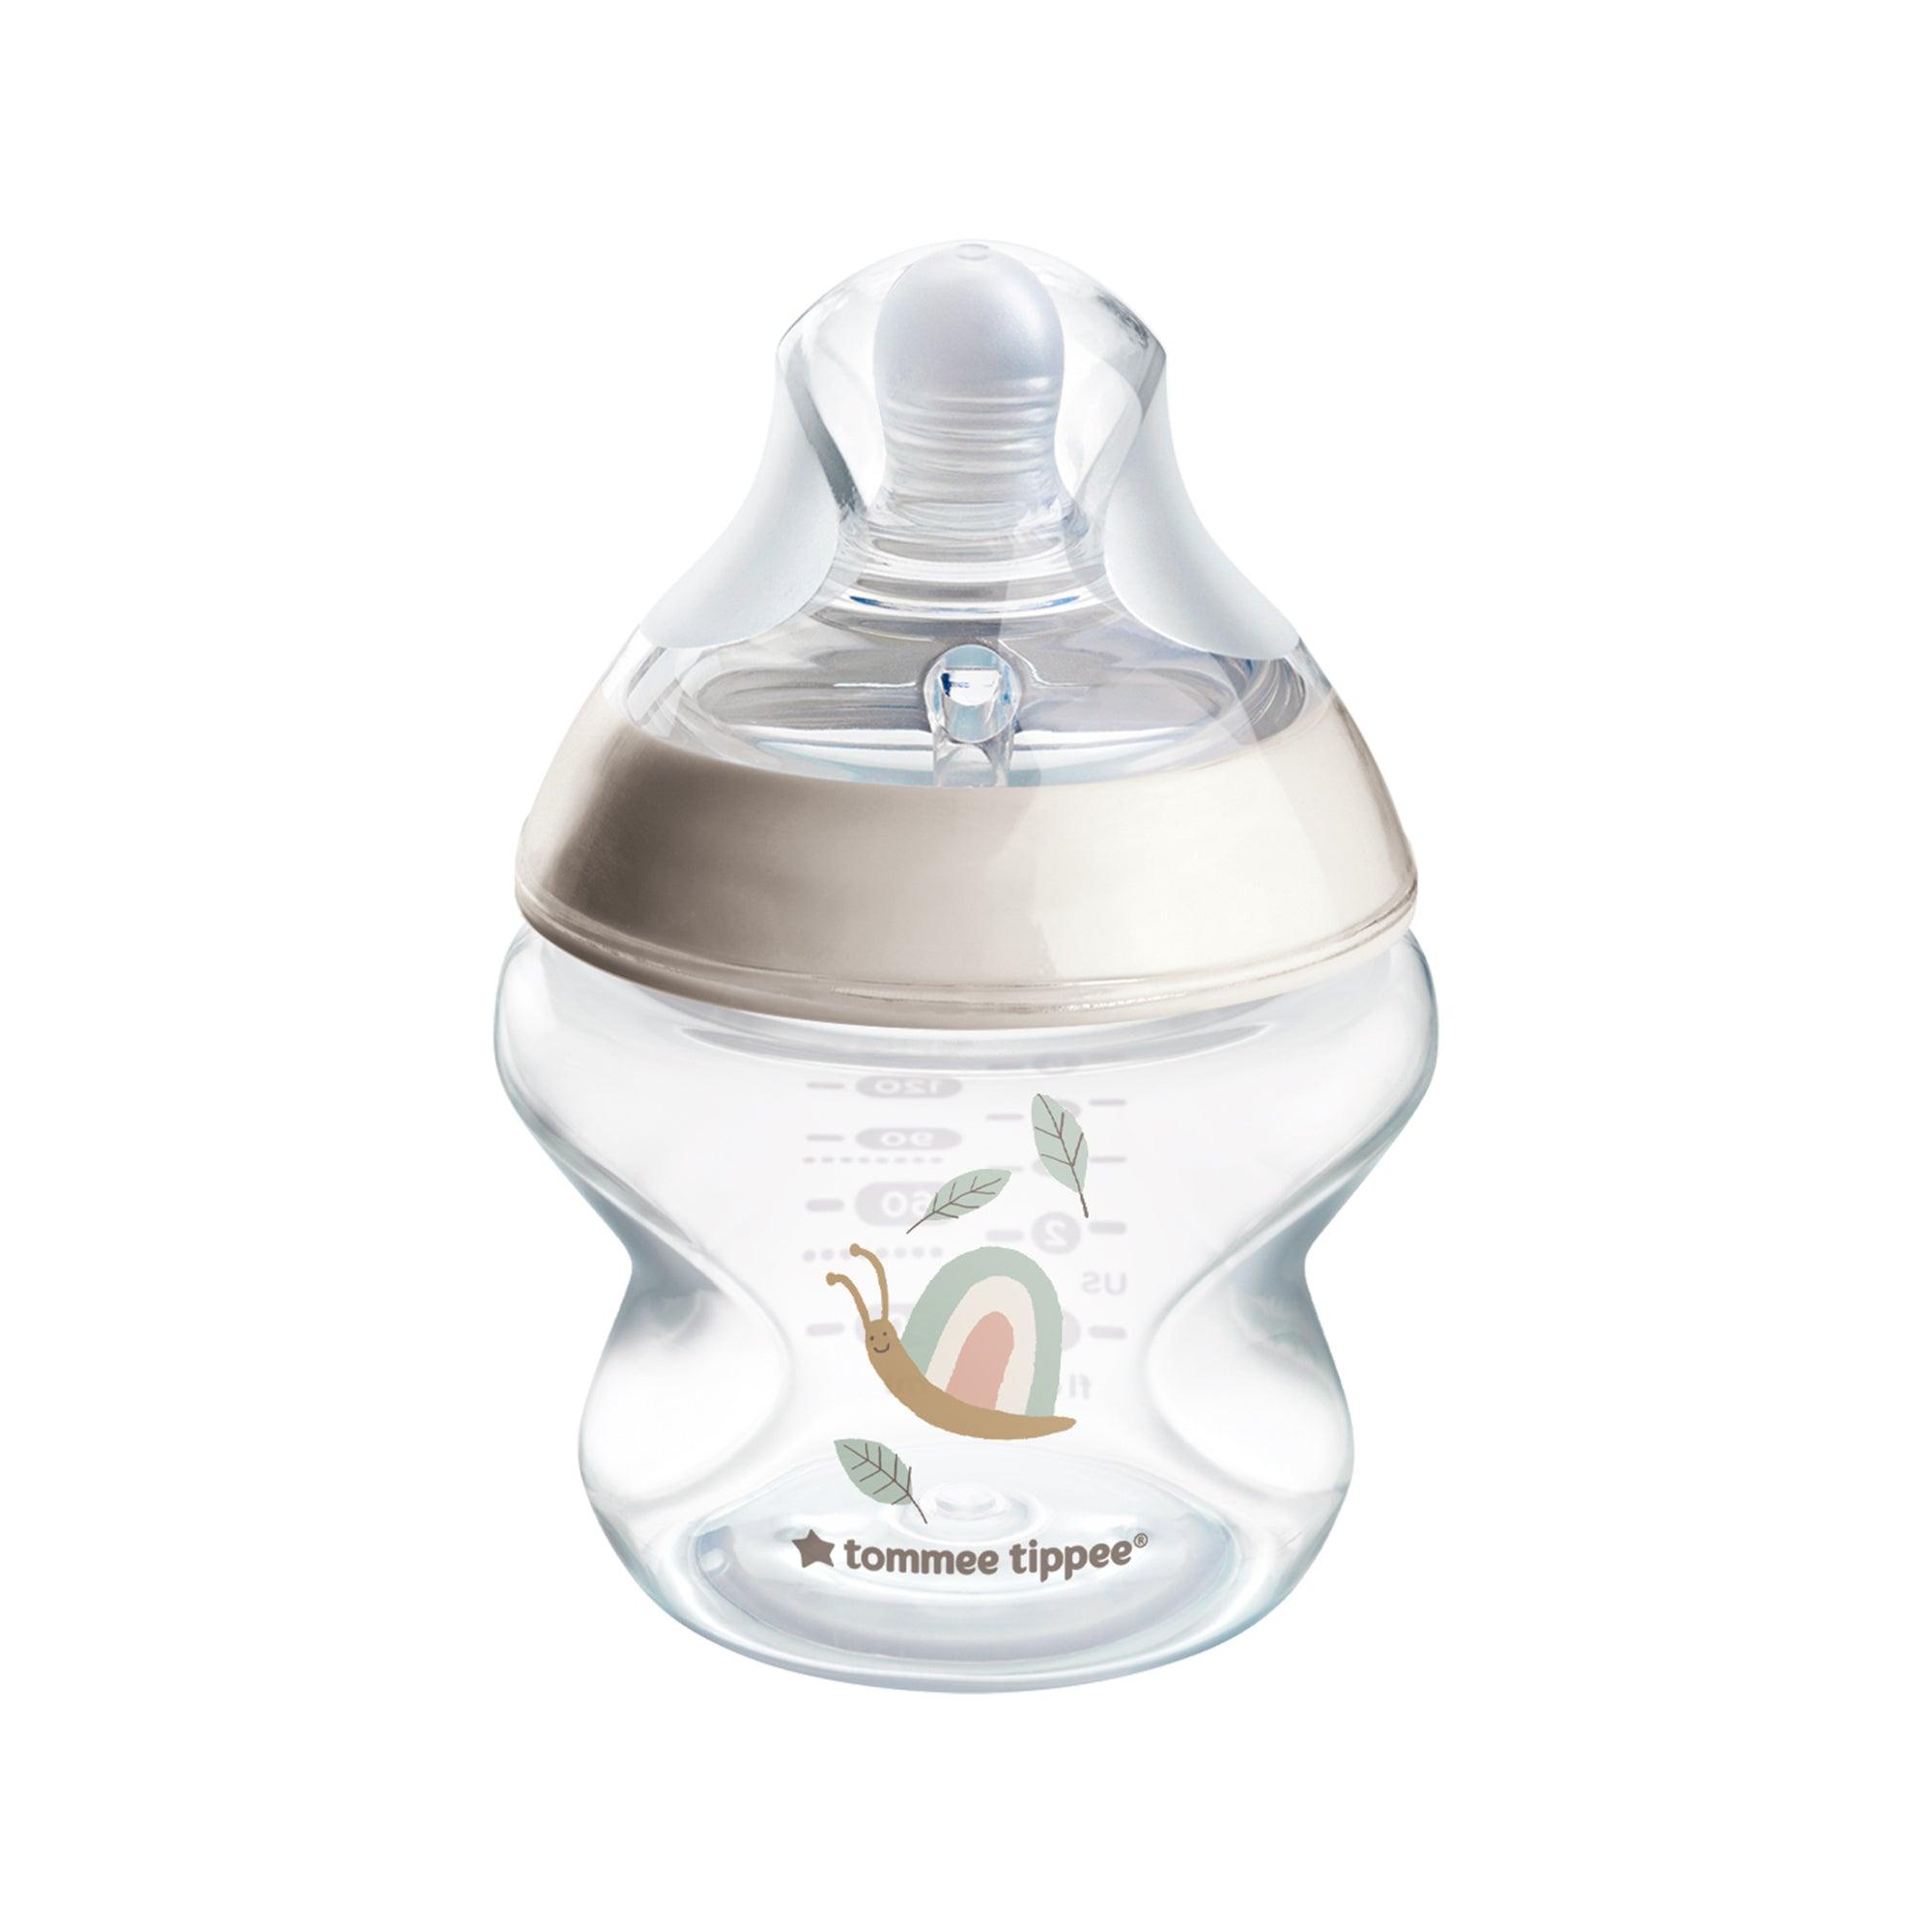 Buy Tommee Tippee Natural Start 5OZ Feeding Bottle 150ml in Snail Print Online in Pakistan 423914 - Lahore Karachi Islamabad